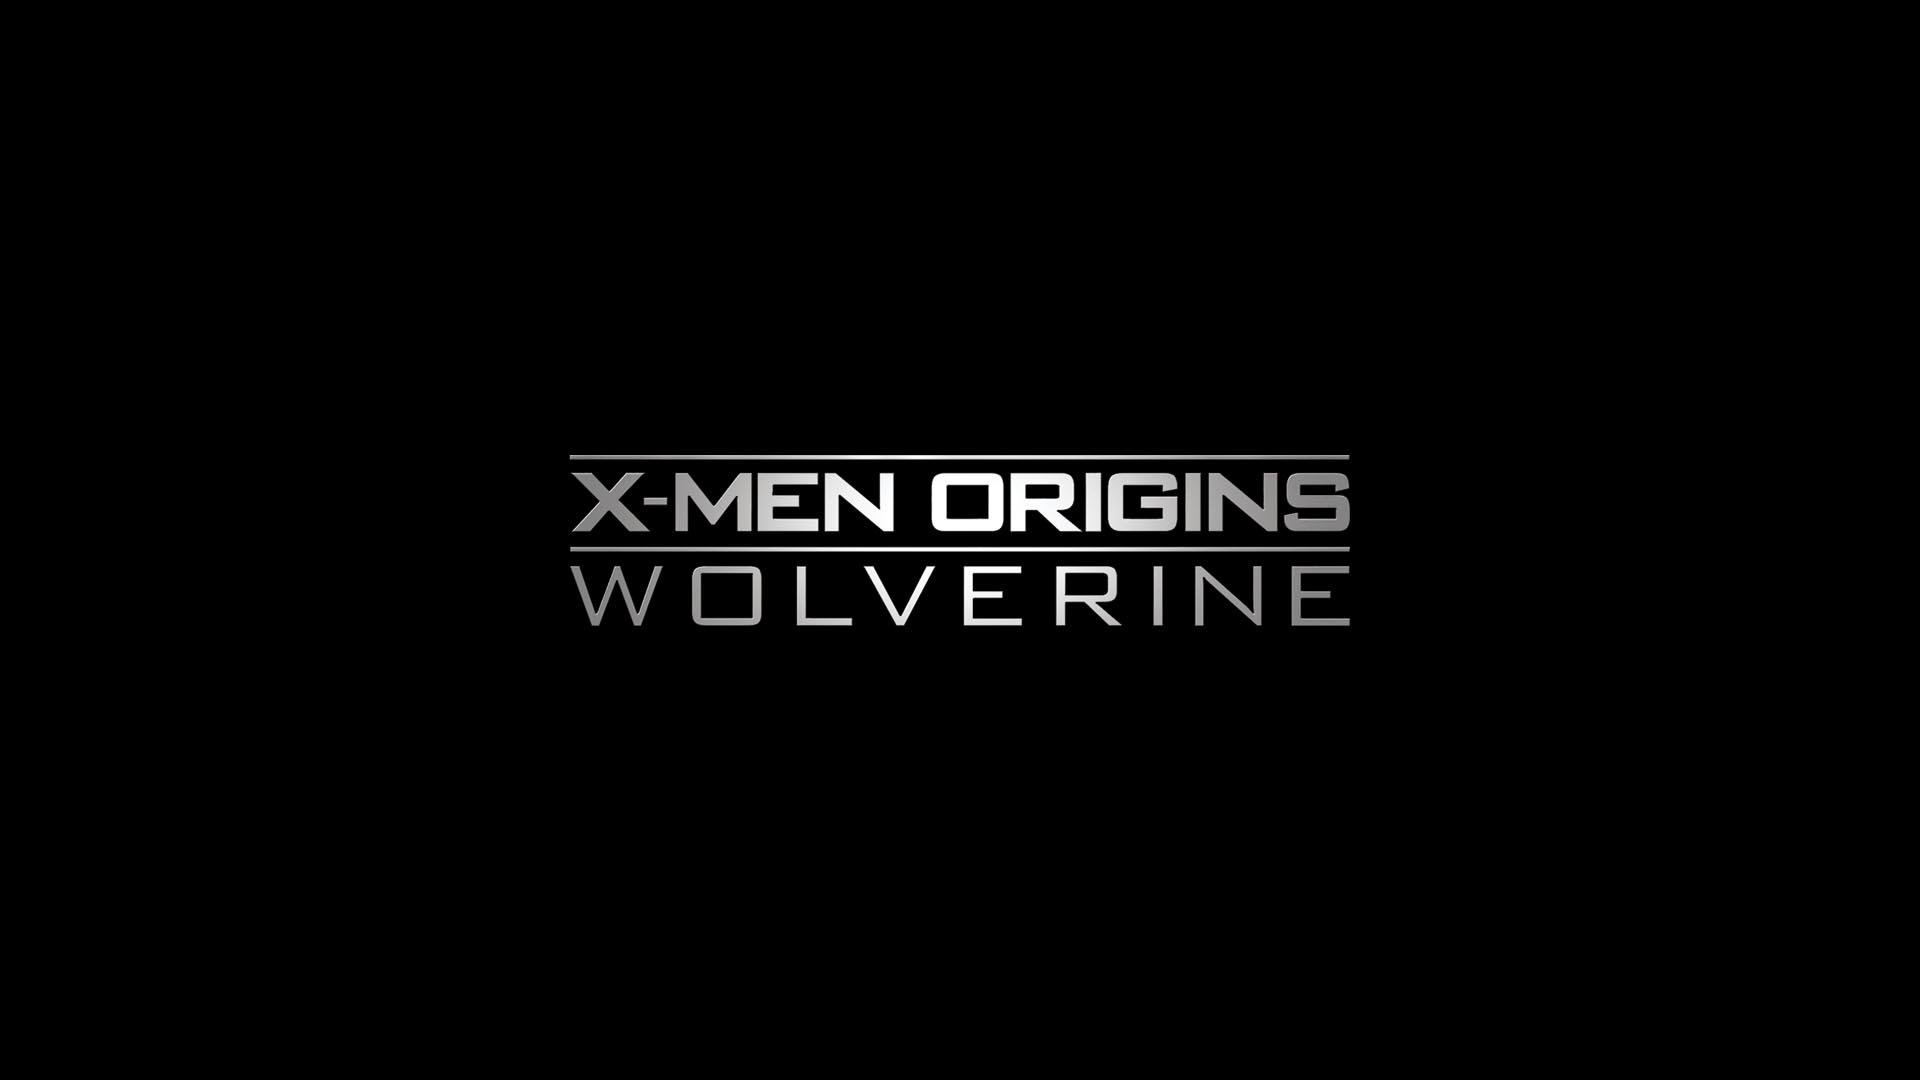 Download hd 1920x1080 X-Men Origins: Wolverine desktop background ID:165783 for free